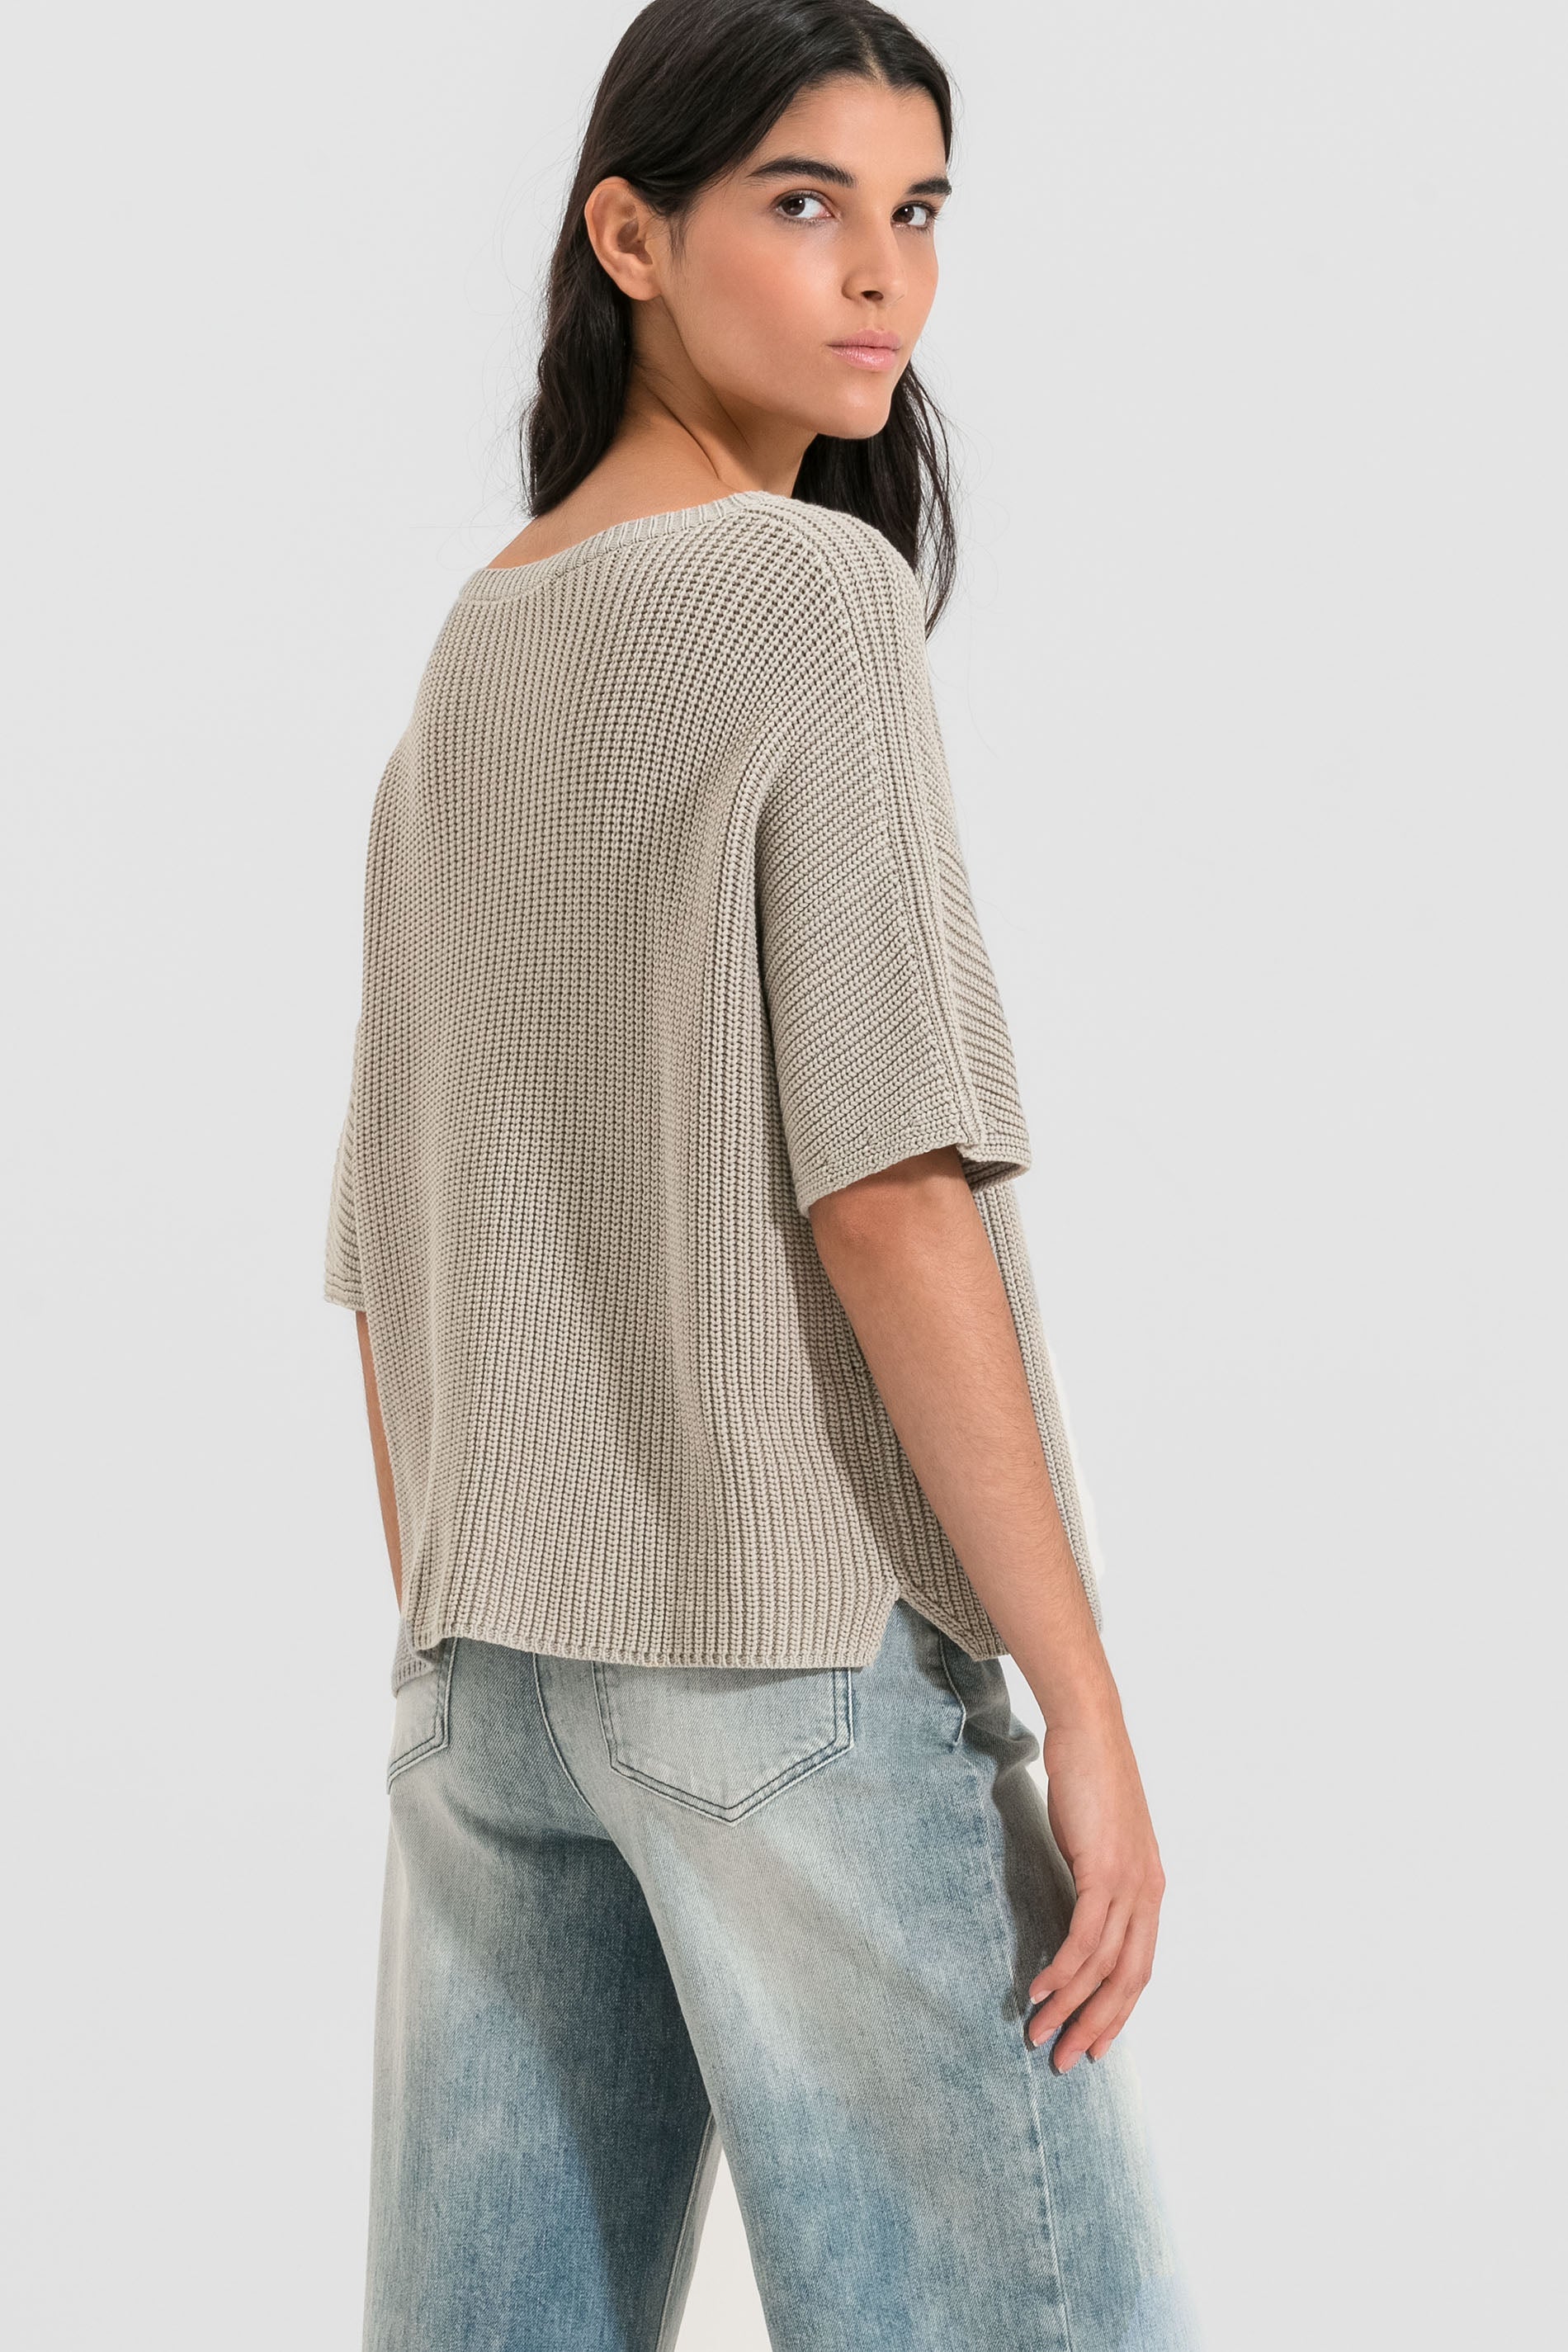 LUISA-CERANO-OUTLET-SALE-Shirt-Pullover in Ripp-Optik-ARCHIVIST